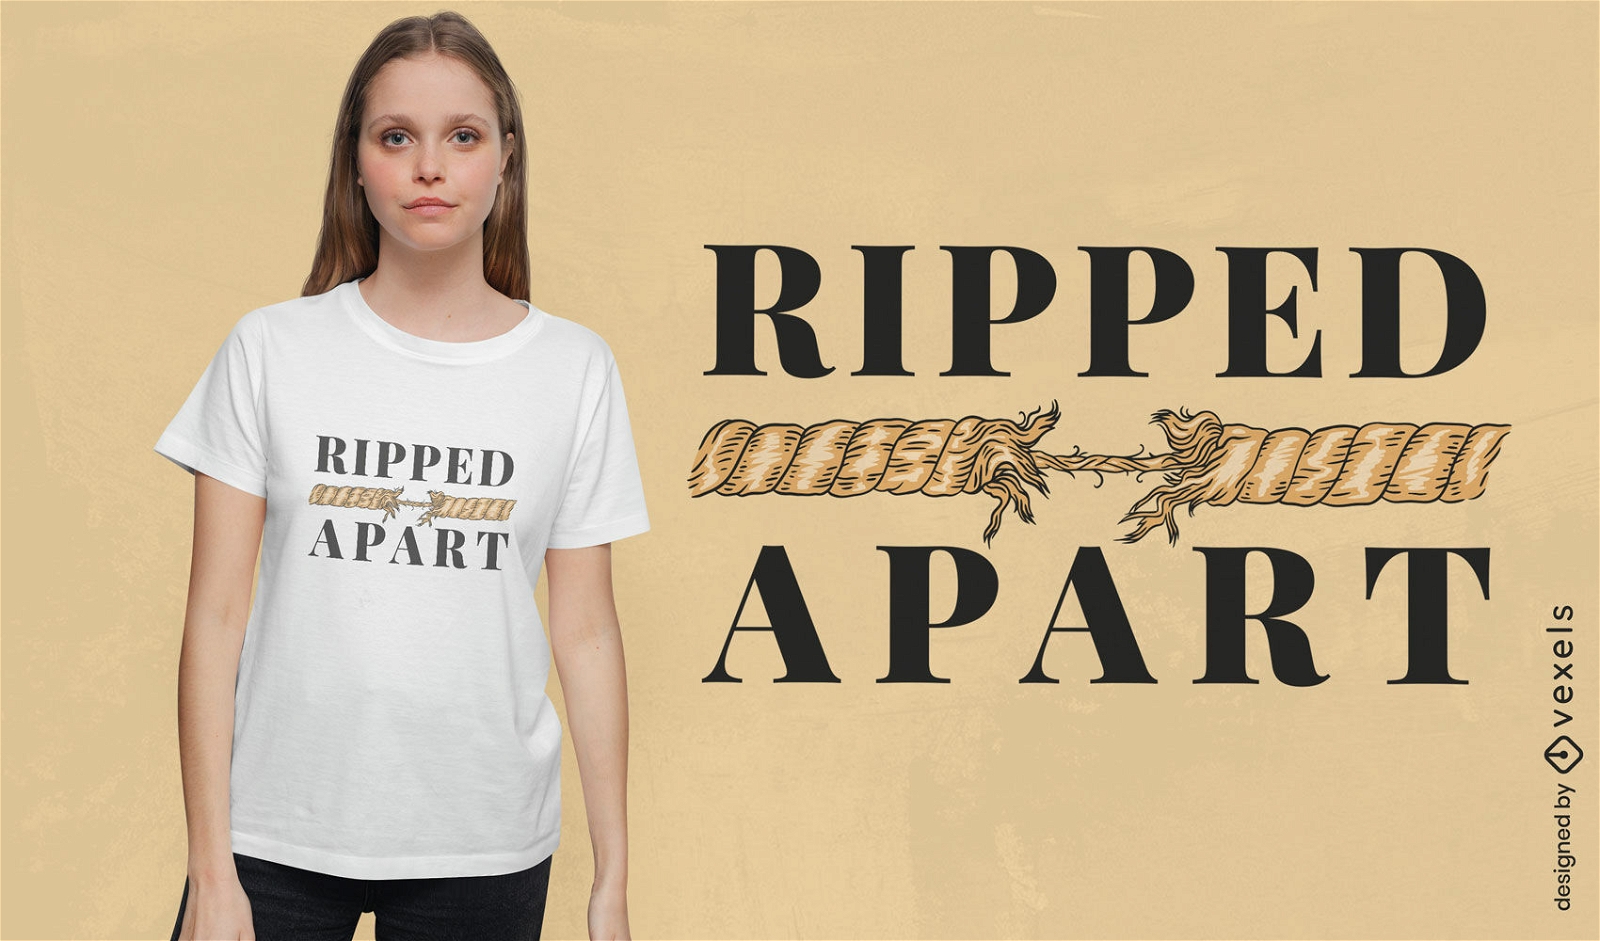 Ripped apar rope t t-shirt design